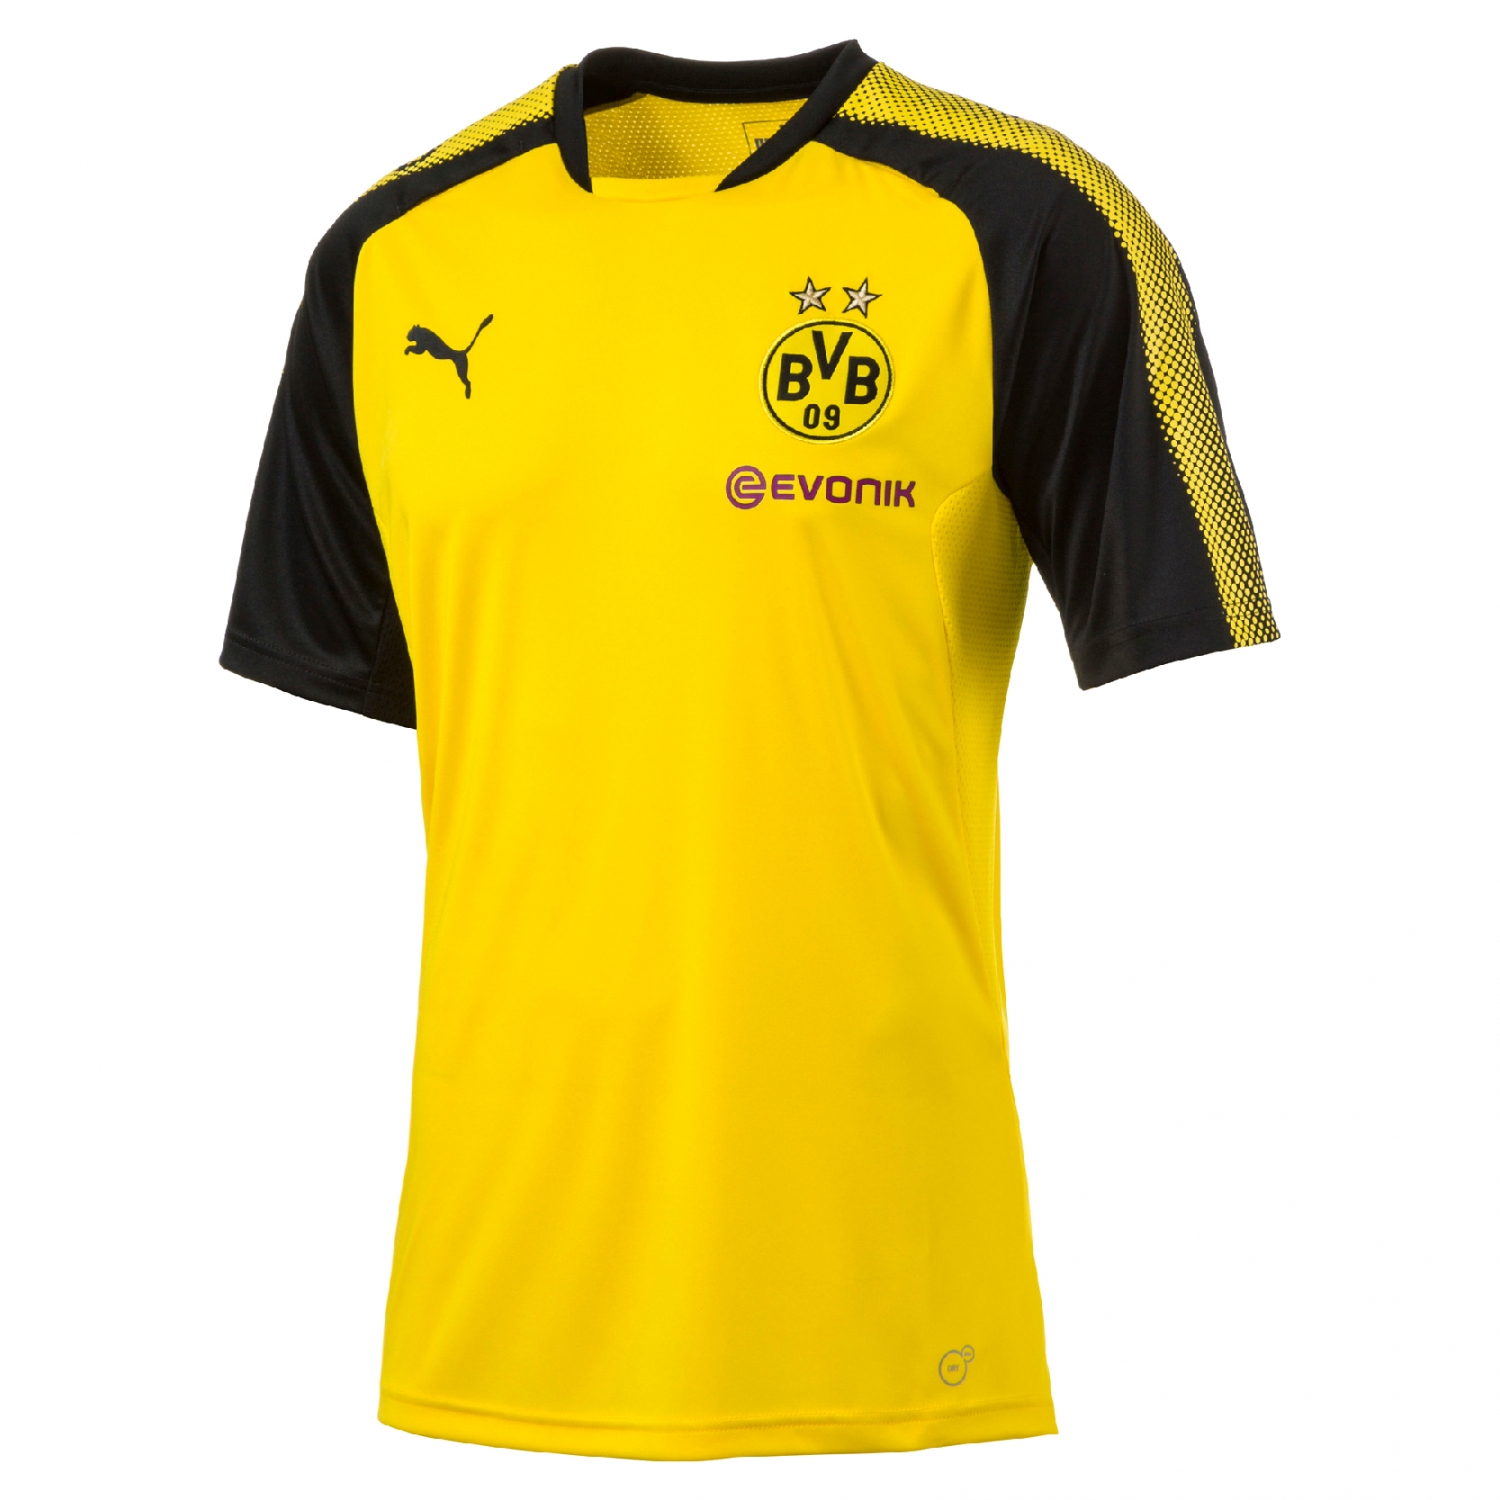 Puma BVB Trainingstrikot Borussia Dortmund Herren T-Shirt gelb schwarz